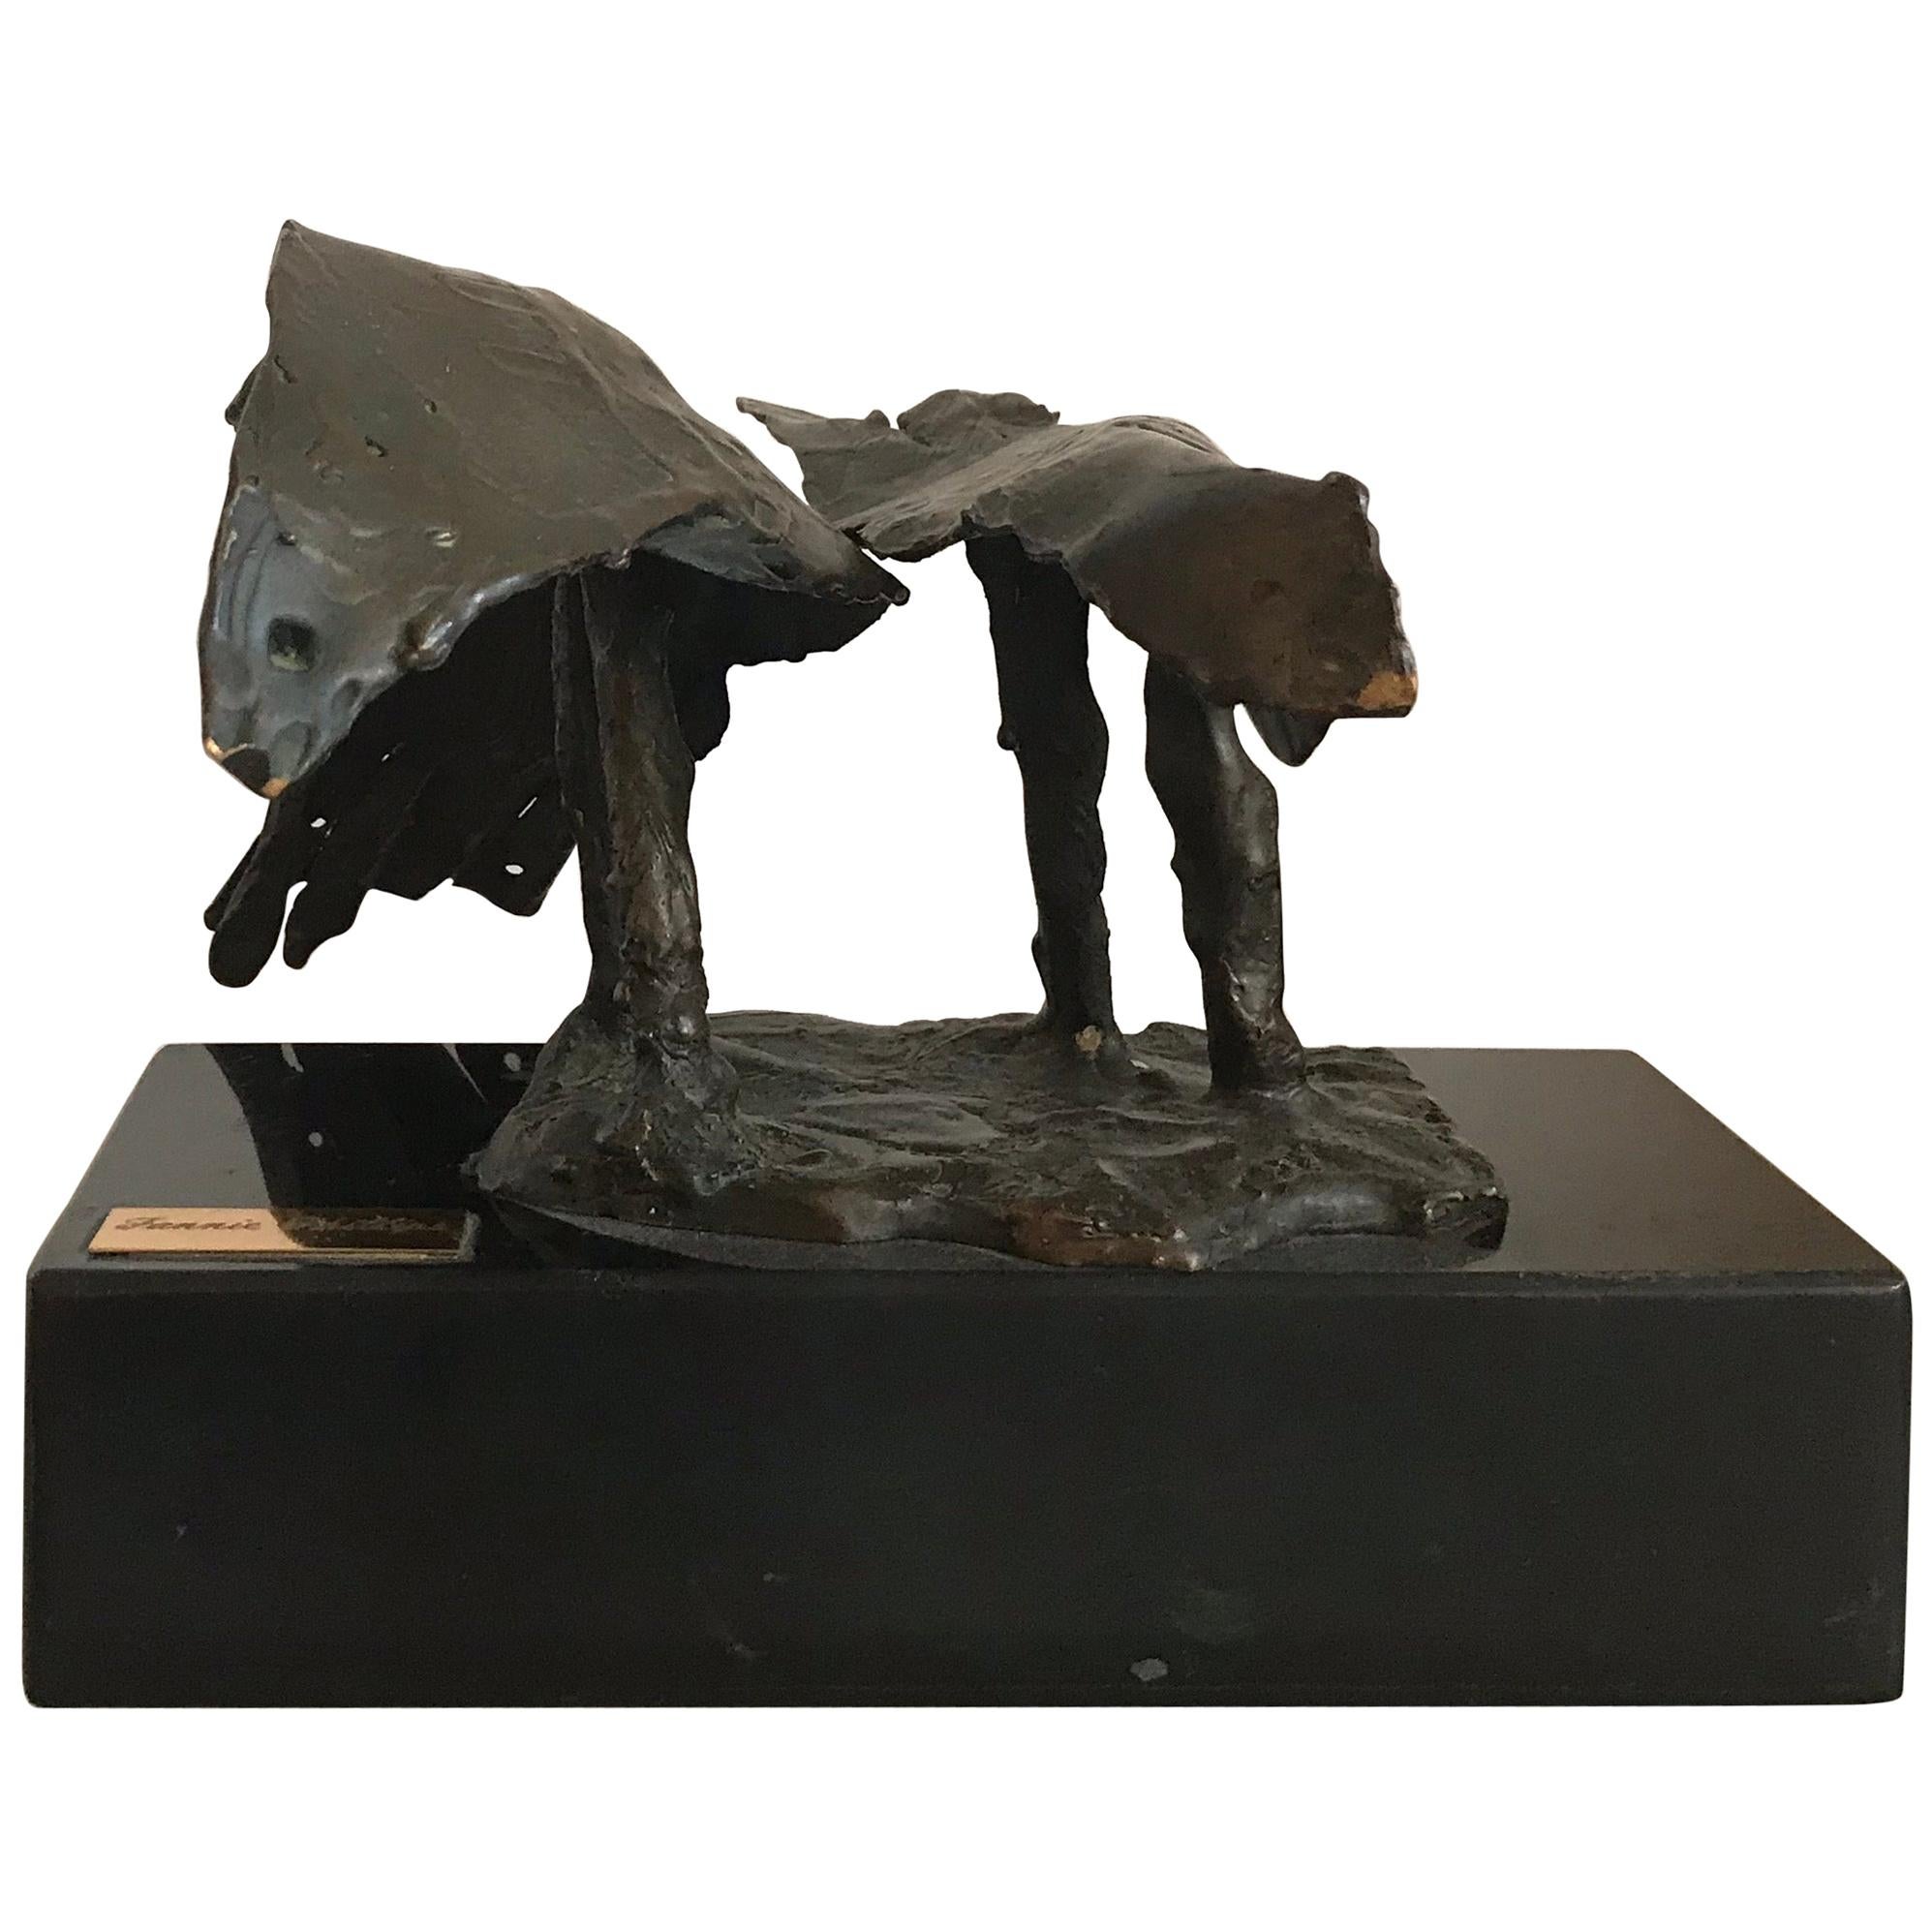 Fannie Phillips Brutalist Style Metal Bird Sculpture For Sale